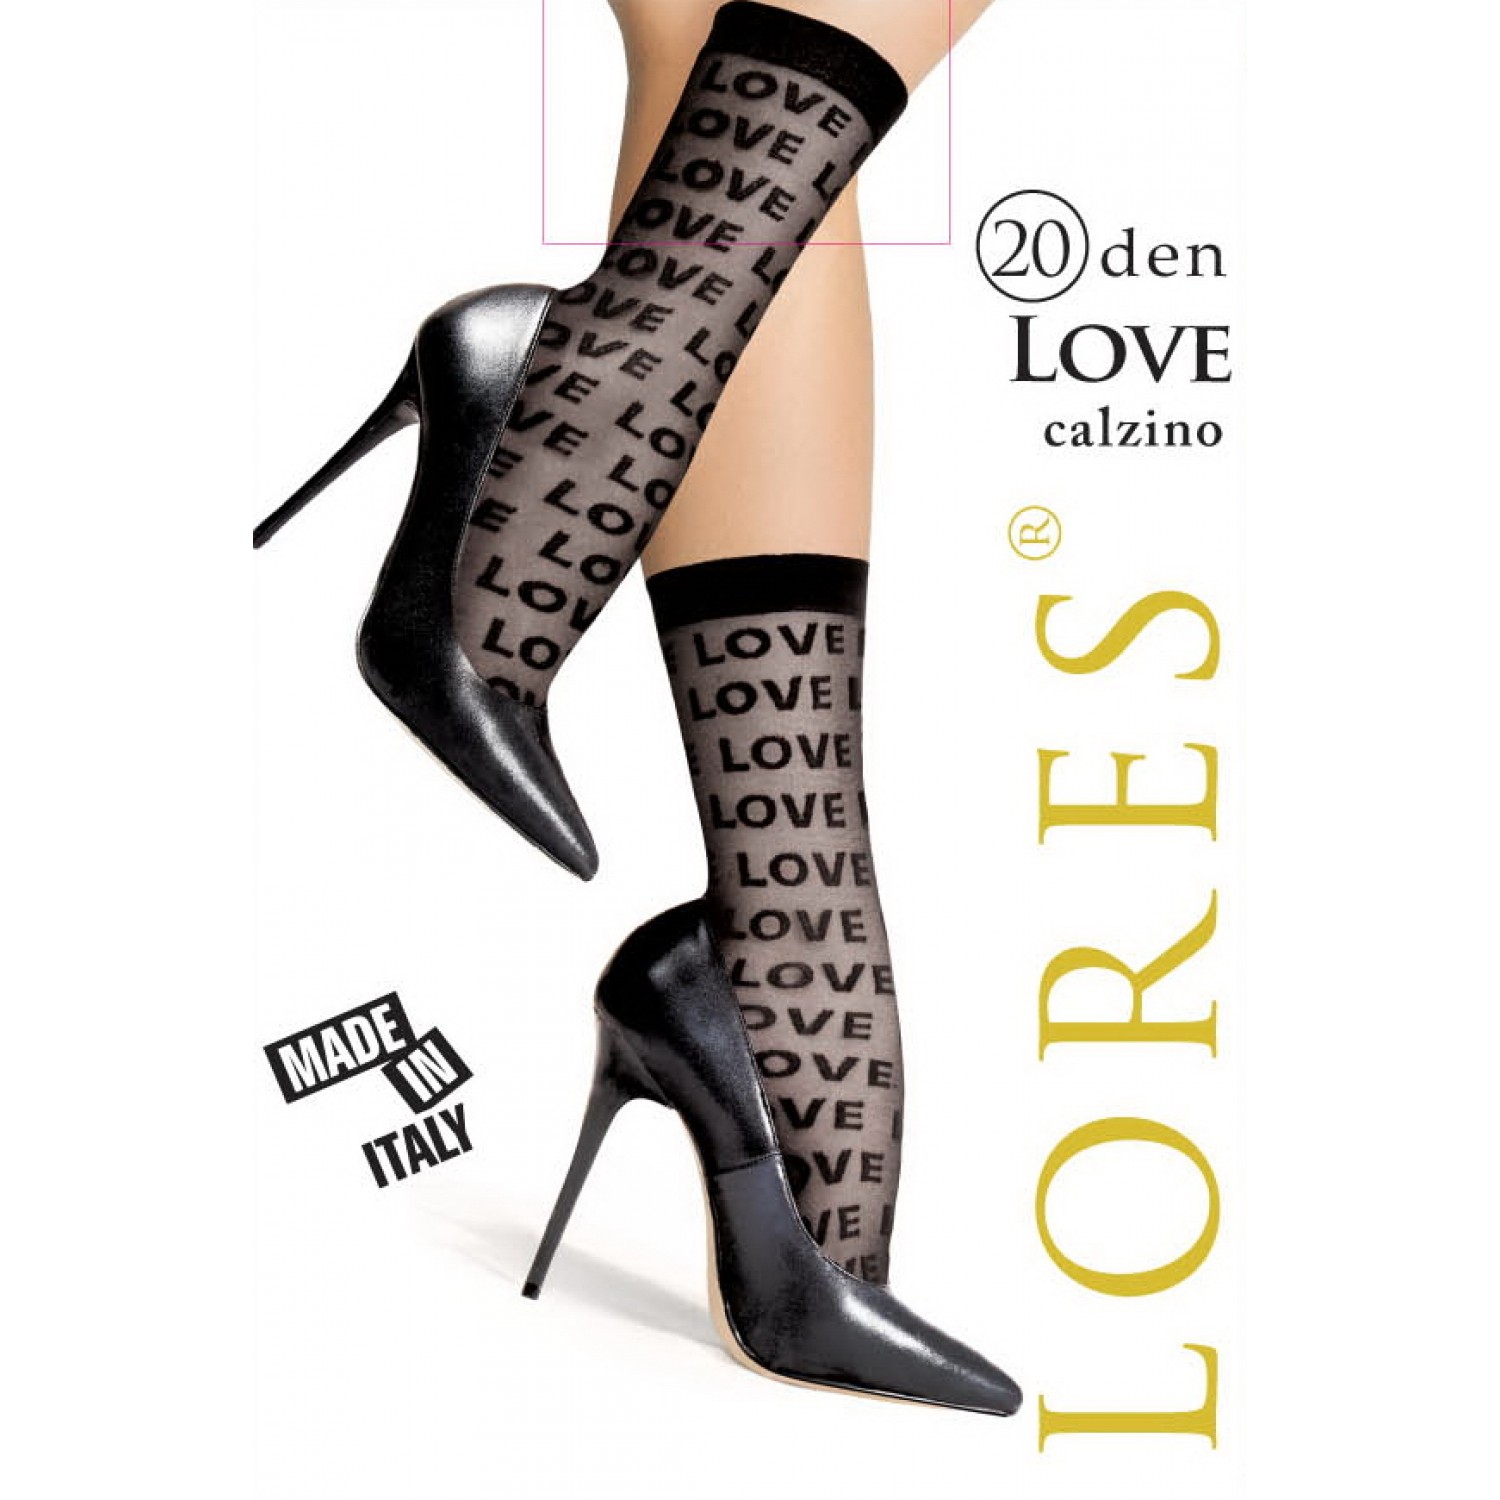 Love lore. Calzino носки. Lores носки женские. Чулки женские модель Ravenna 20 den торговой марки Lores. Lores.